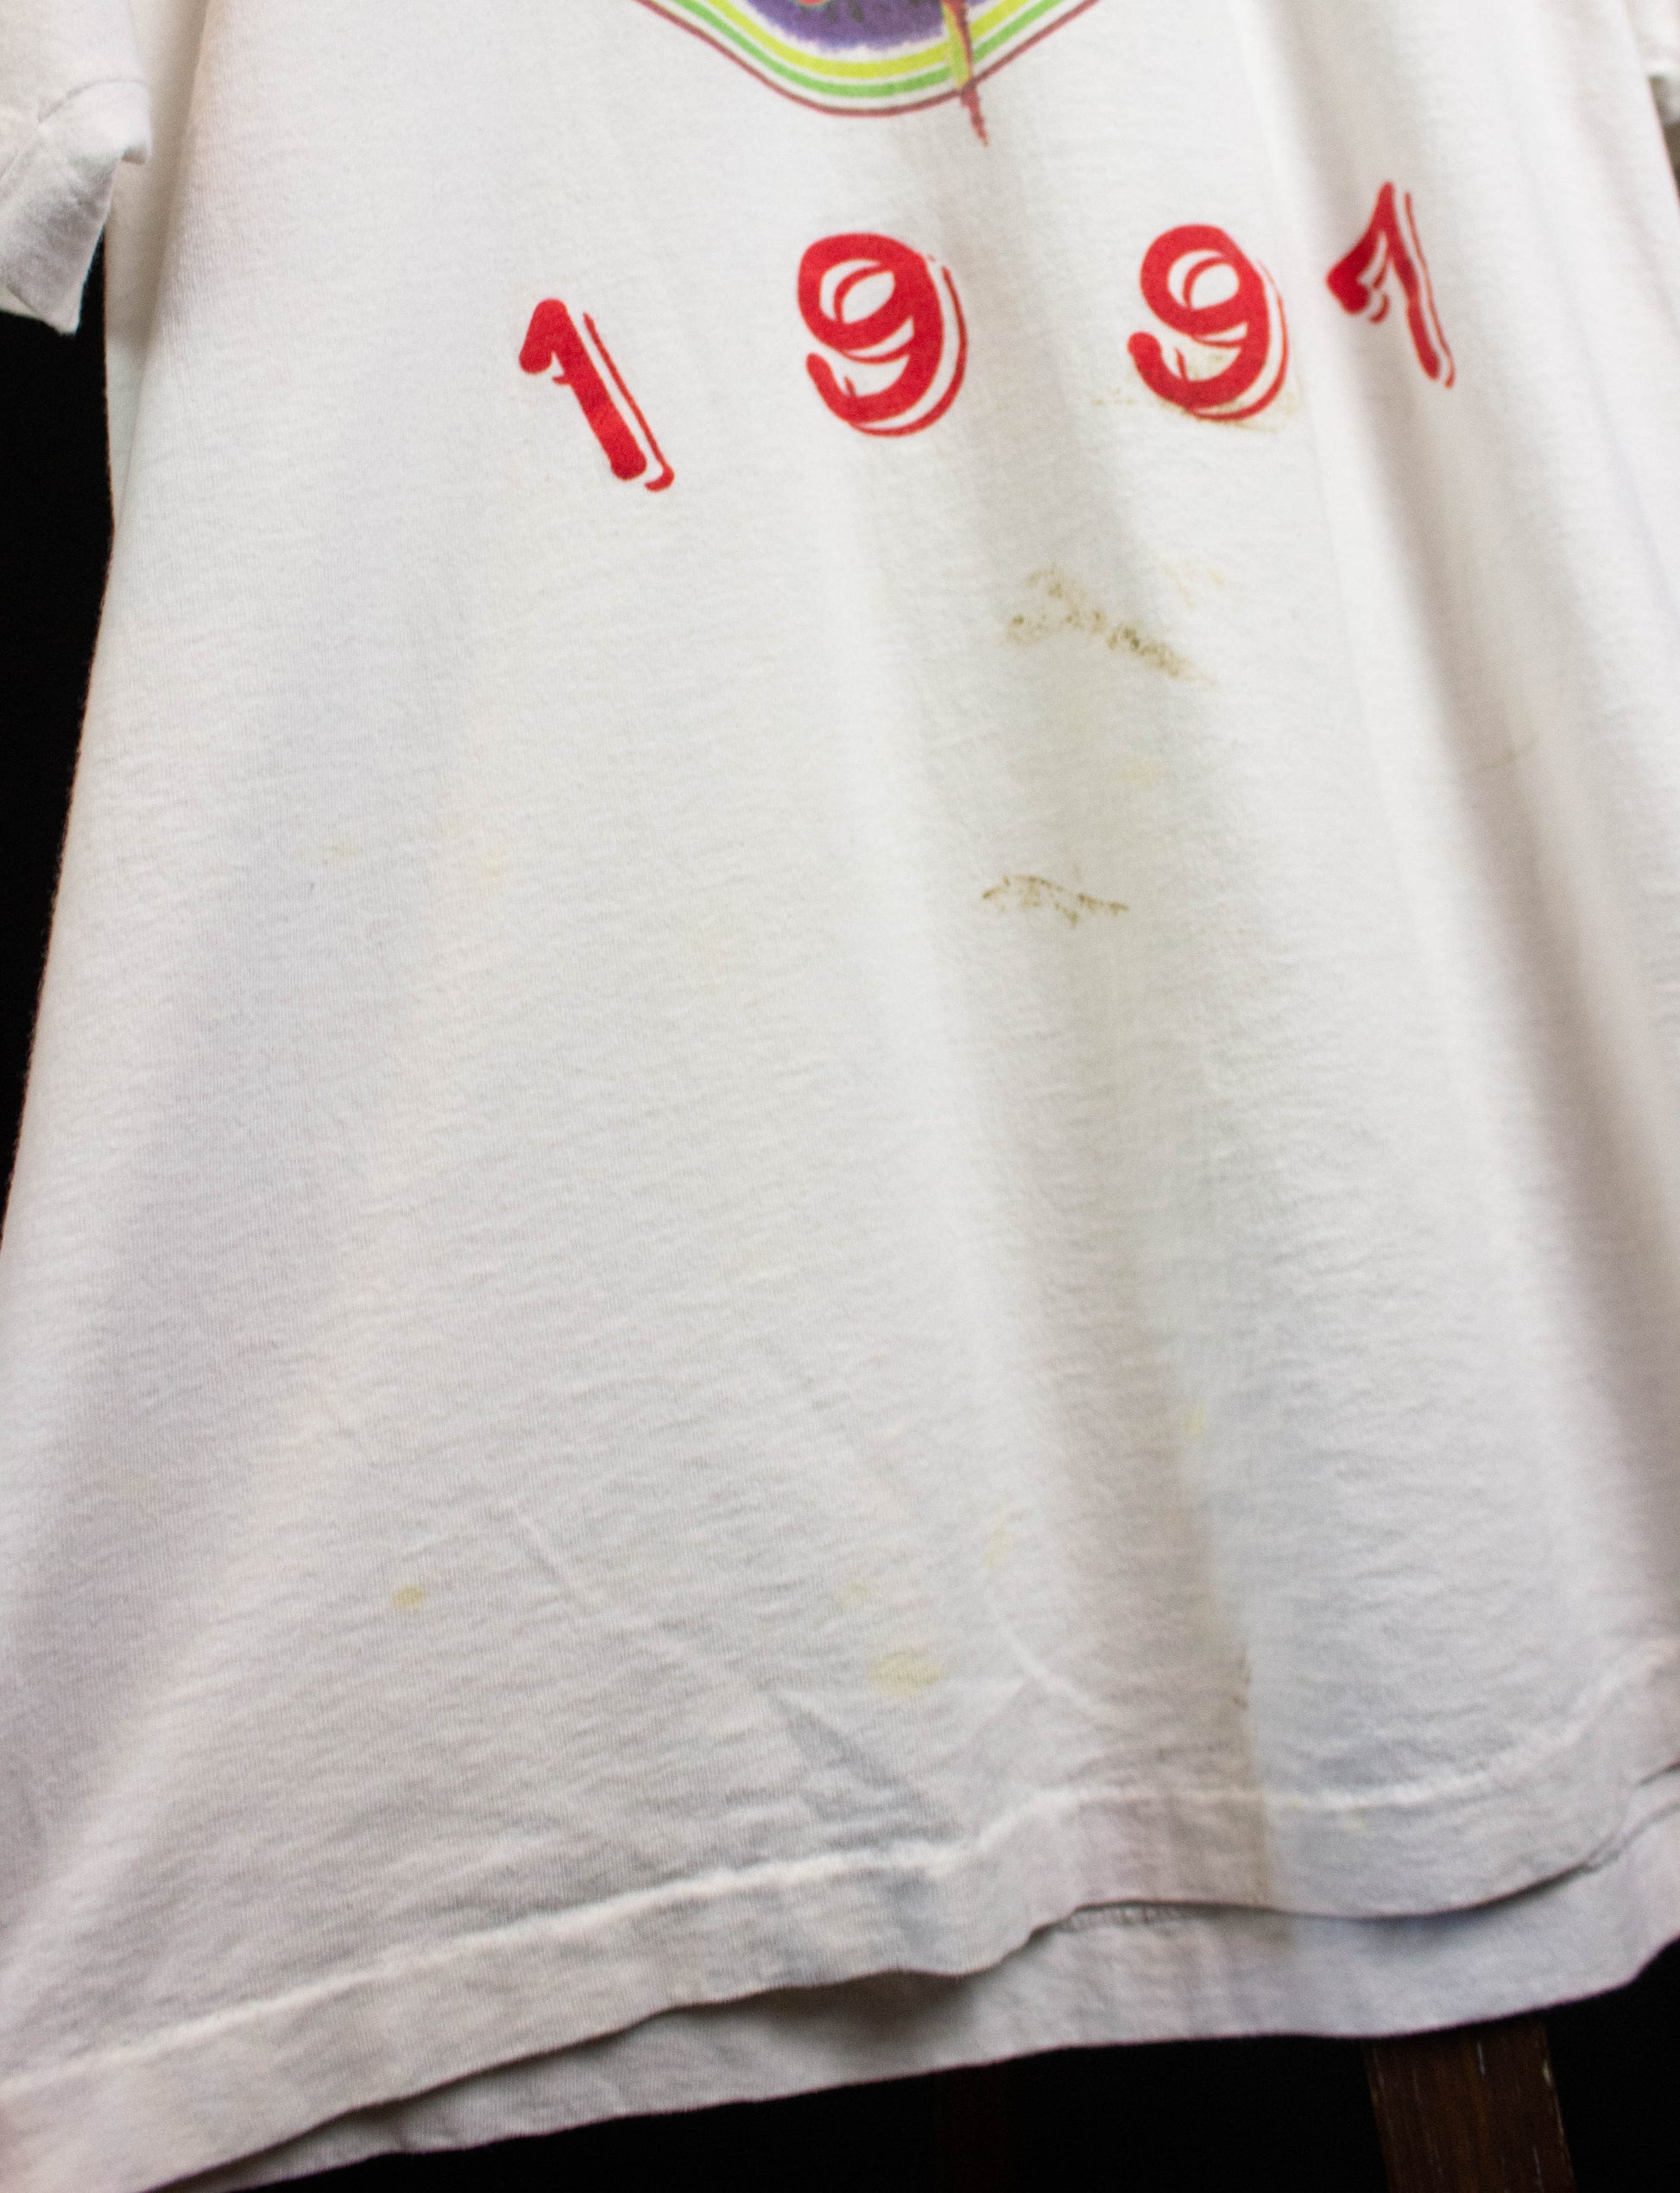 Vintage 1997 Dave Matthews Band Crash Tour Concert T Shirt XL